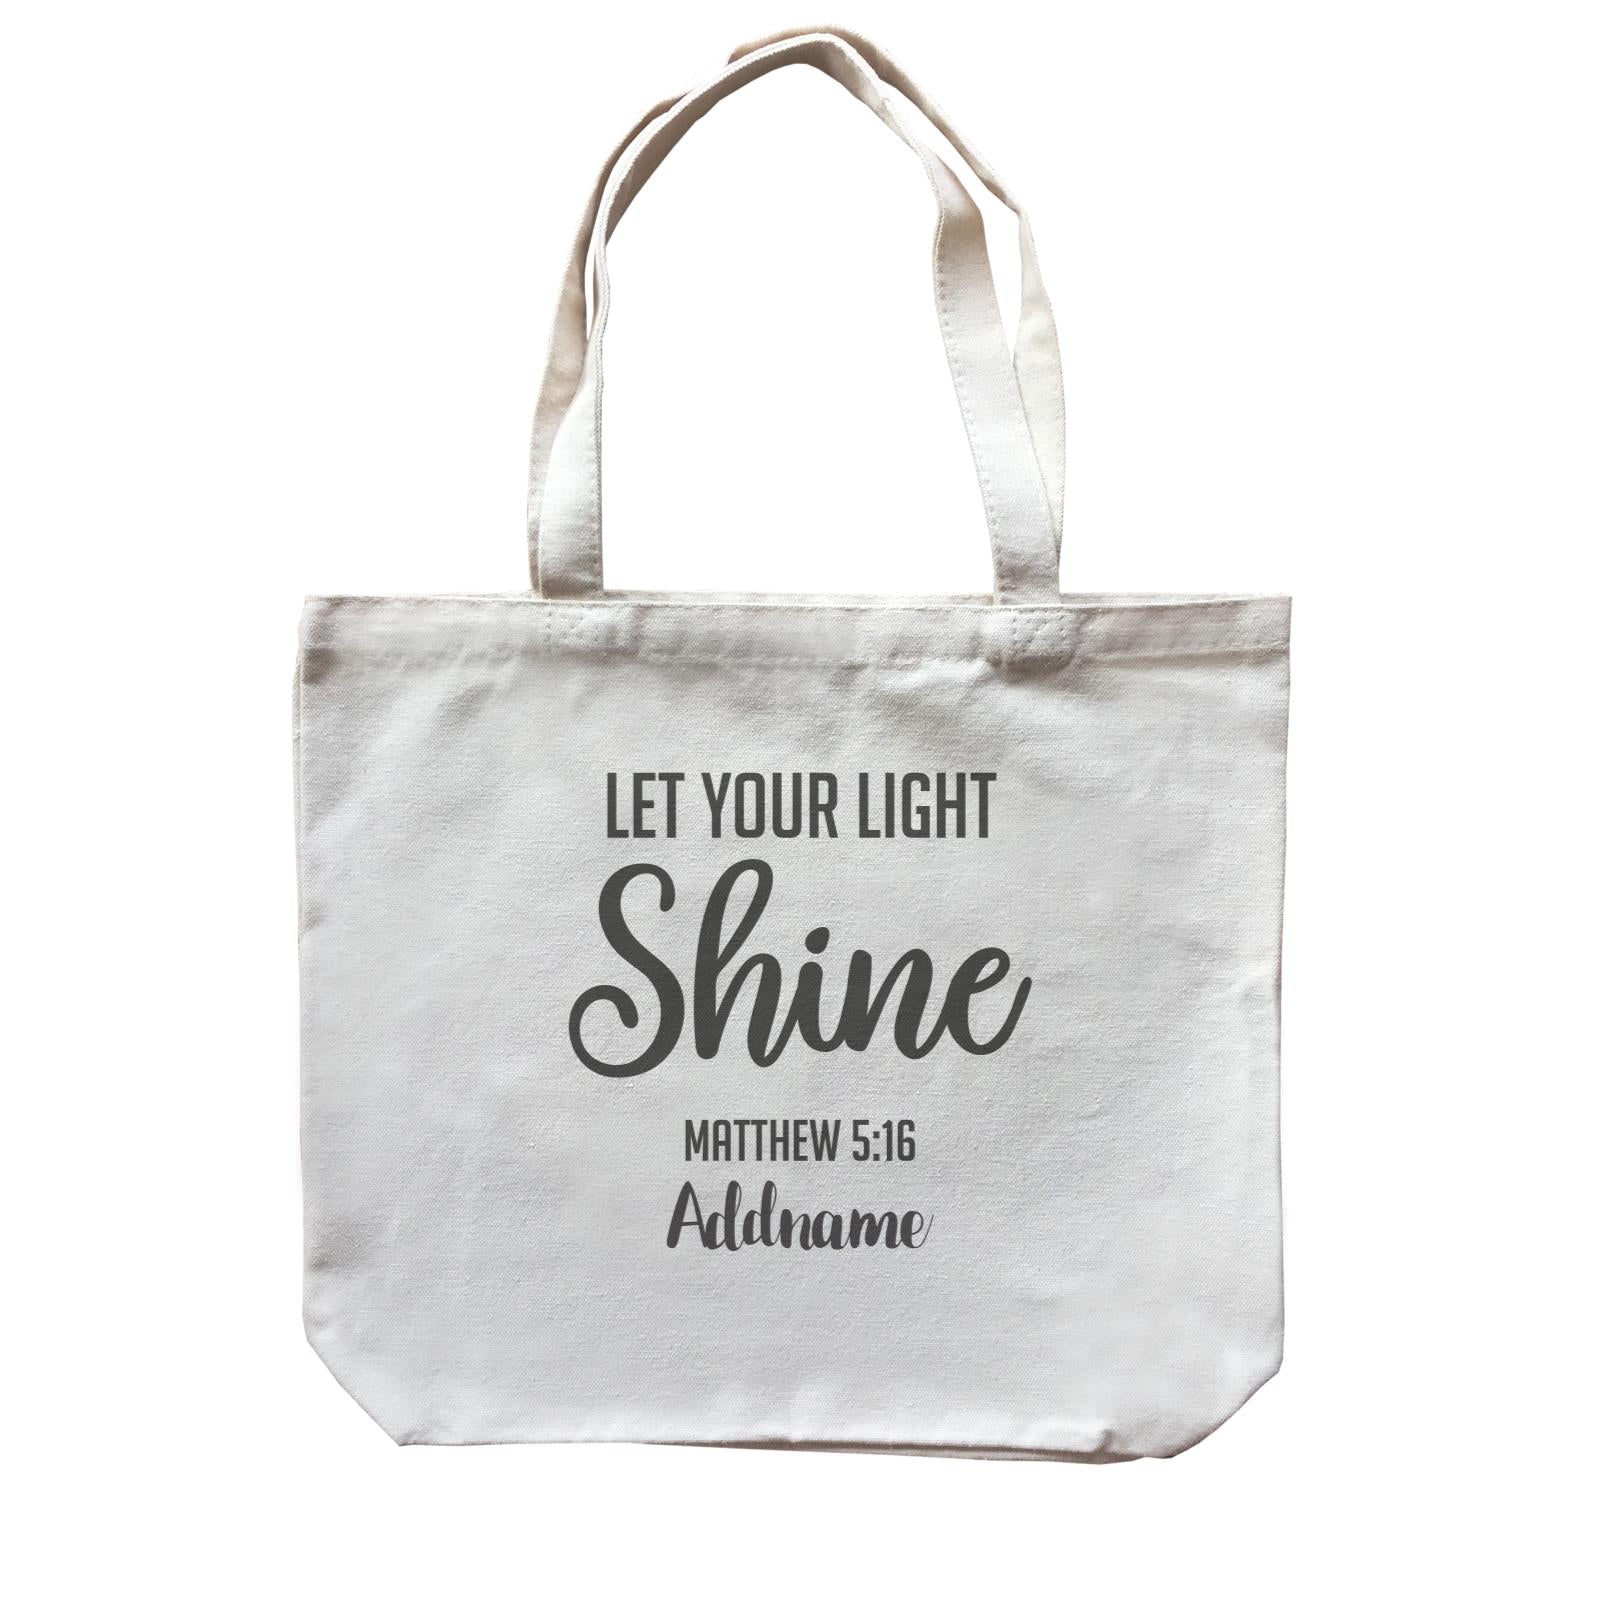 Christian Series Let Your Light Shine Matthew 5.16 Addname Canvas Bag